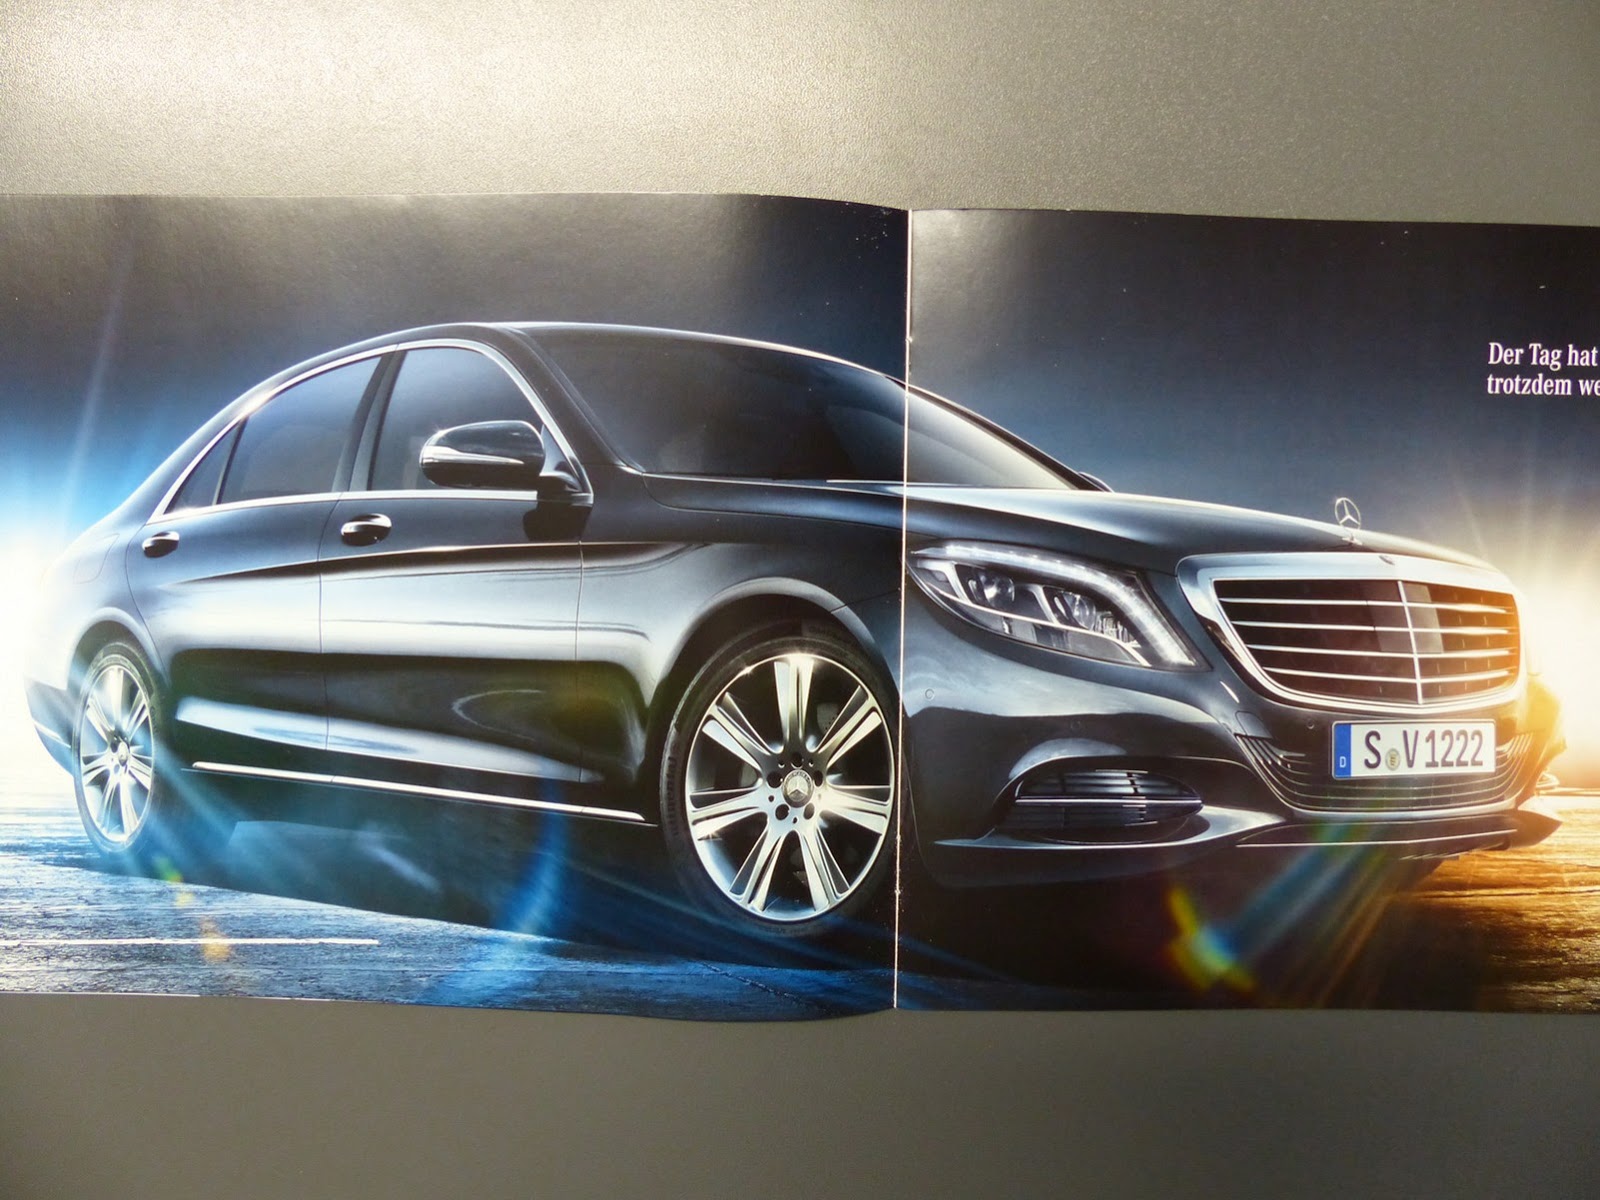 2014-Mercedes-Benz-S-Class-Brochure-Carscoops5%25255B2%25255D.jpg